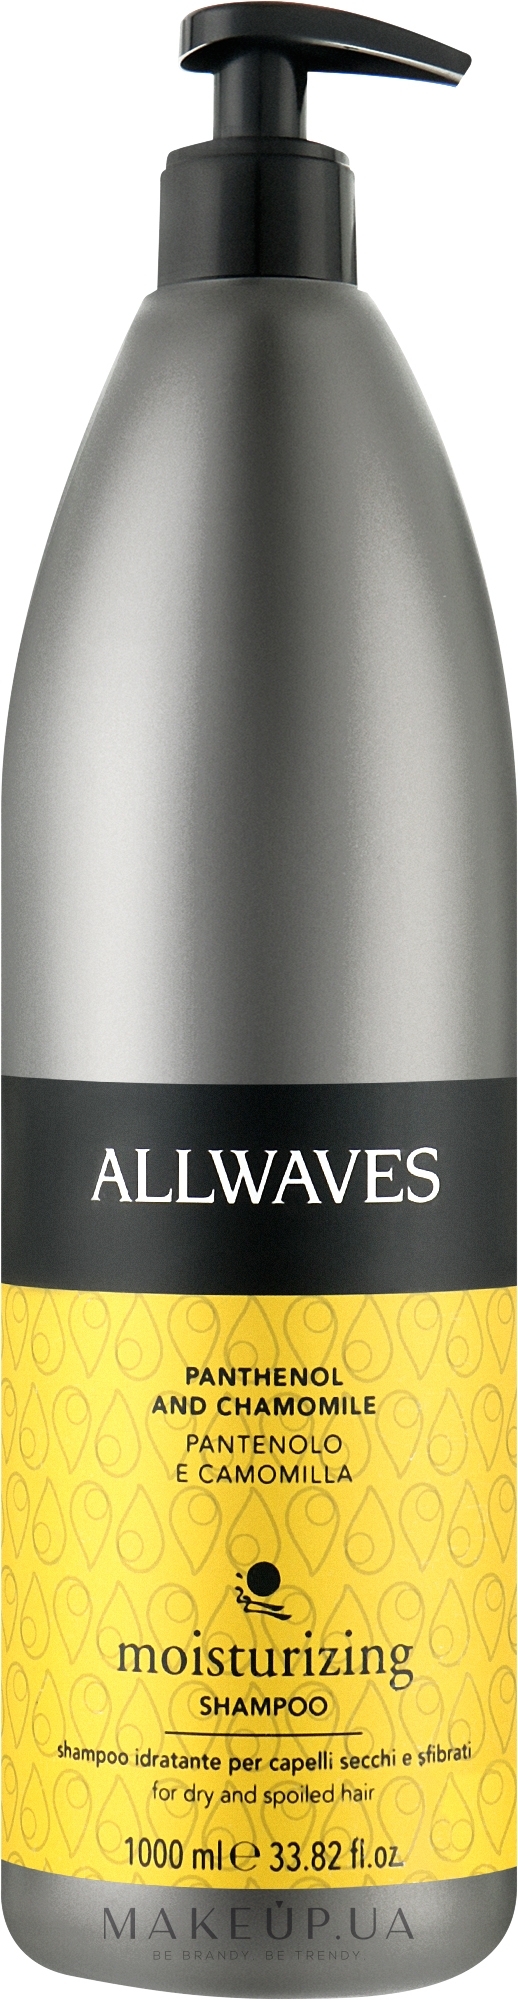 Увлажняющий шампунь для волос - Allwaves Idratante Moisturizing Shampoo  — фото 1000ml